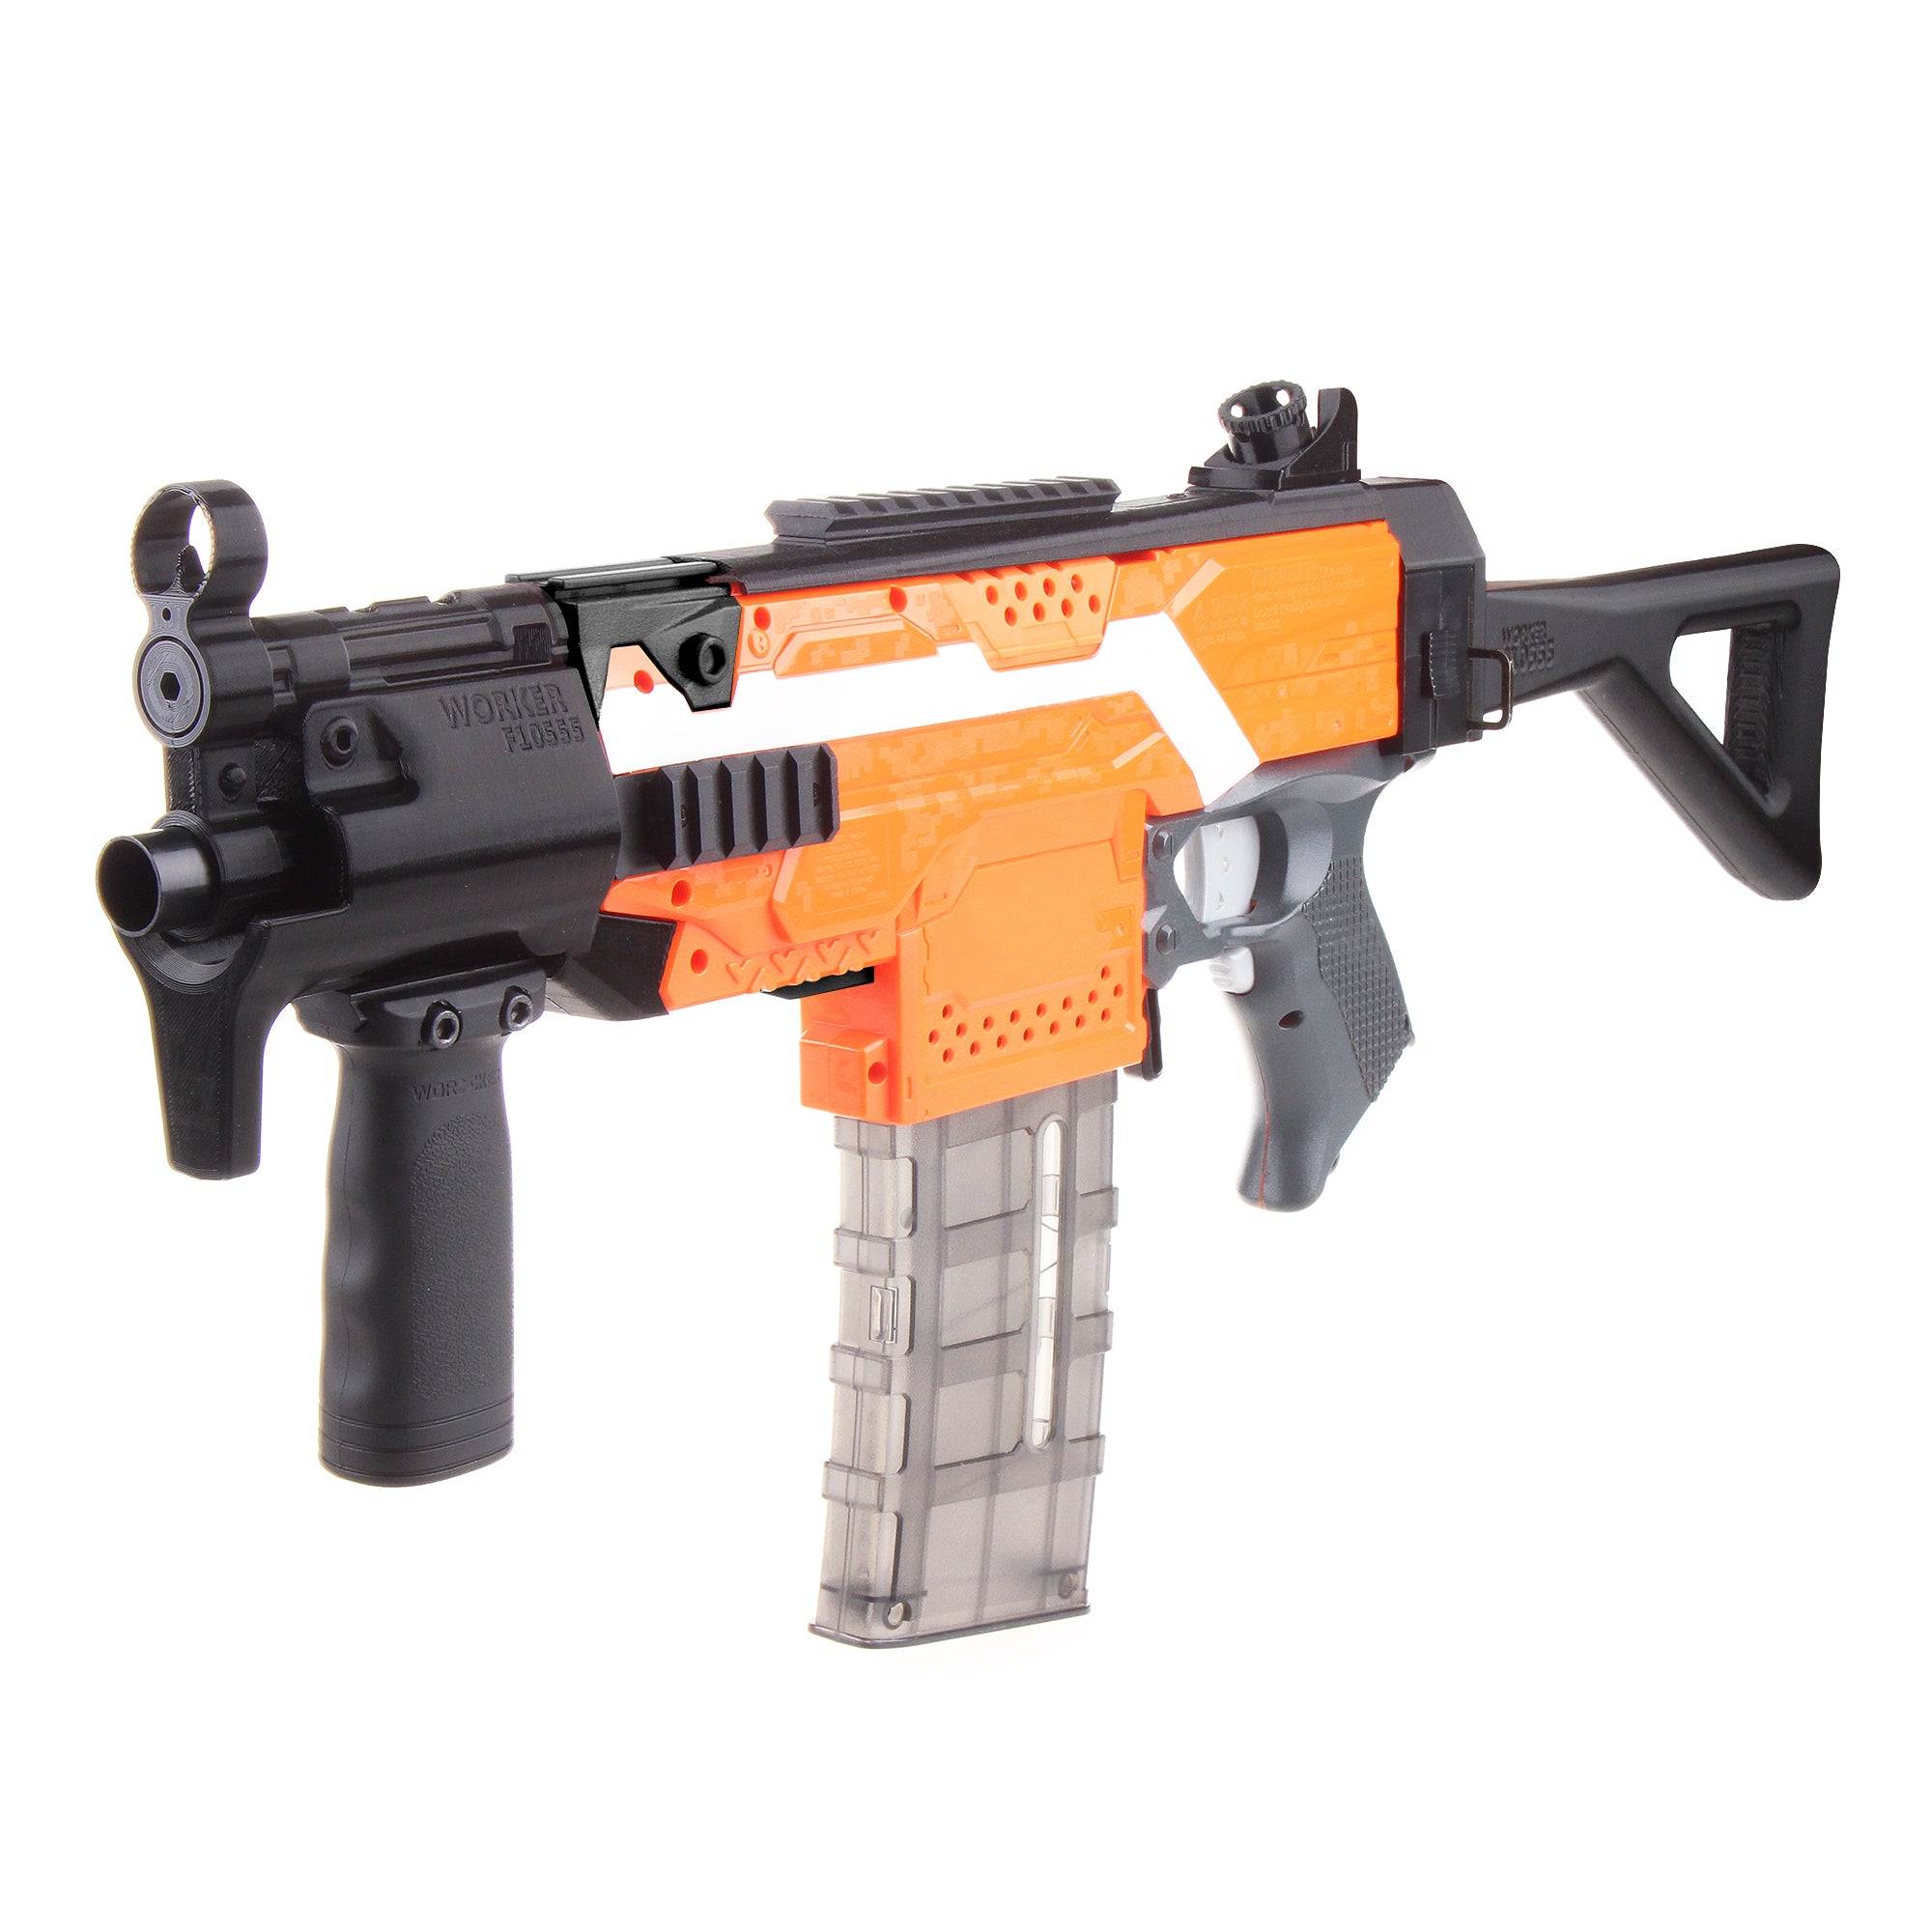 Worker Mod DIY Imitation MP5-K Kits Combo 12 Items for Nerf Stryfe Modify Toy - BlasterMOD